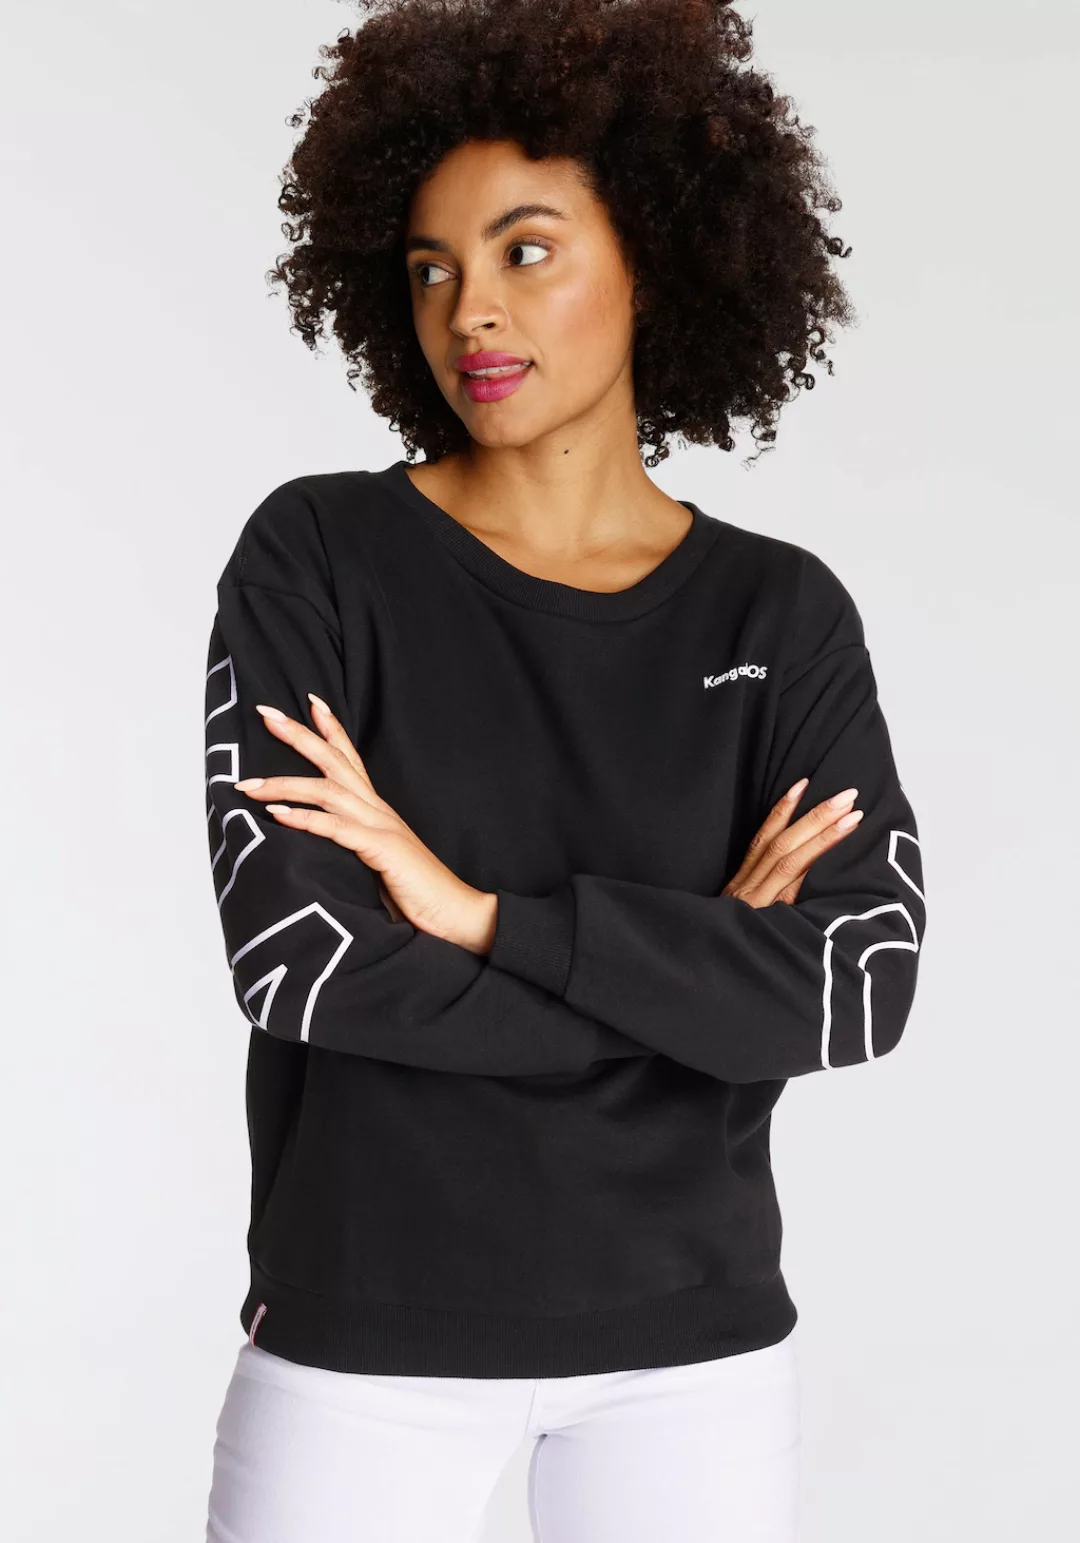 KangaROOS Sweatshirt NEUE KOLLEKTION günstig online kaufen